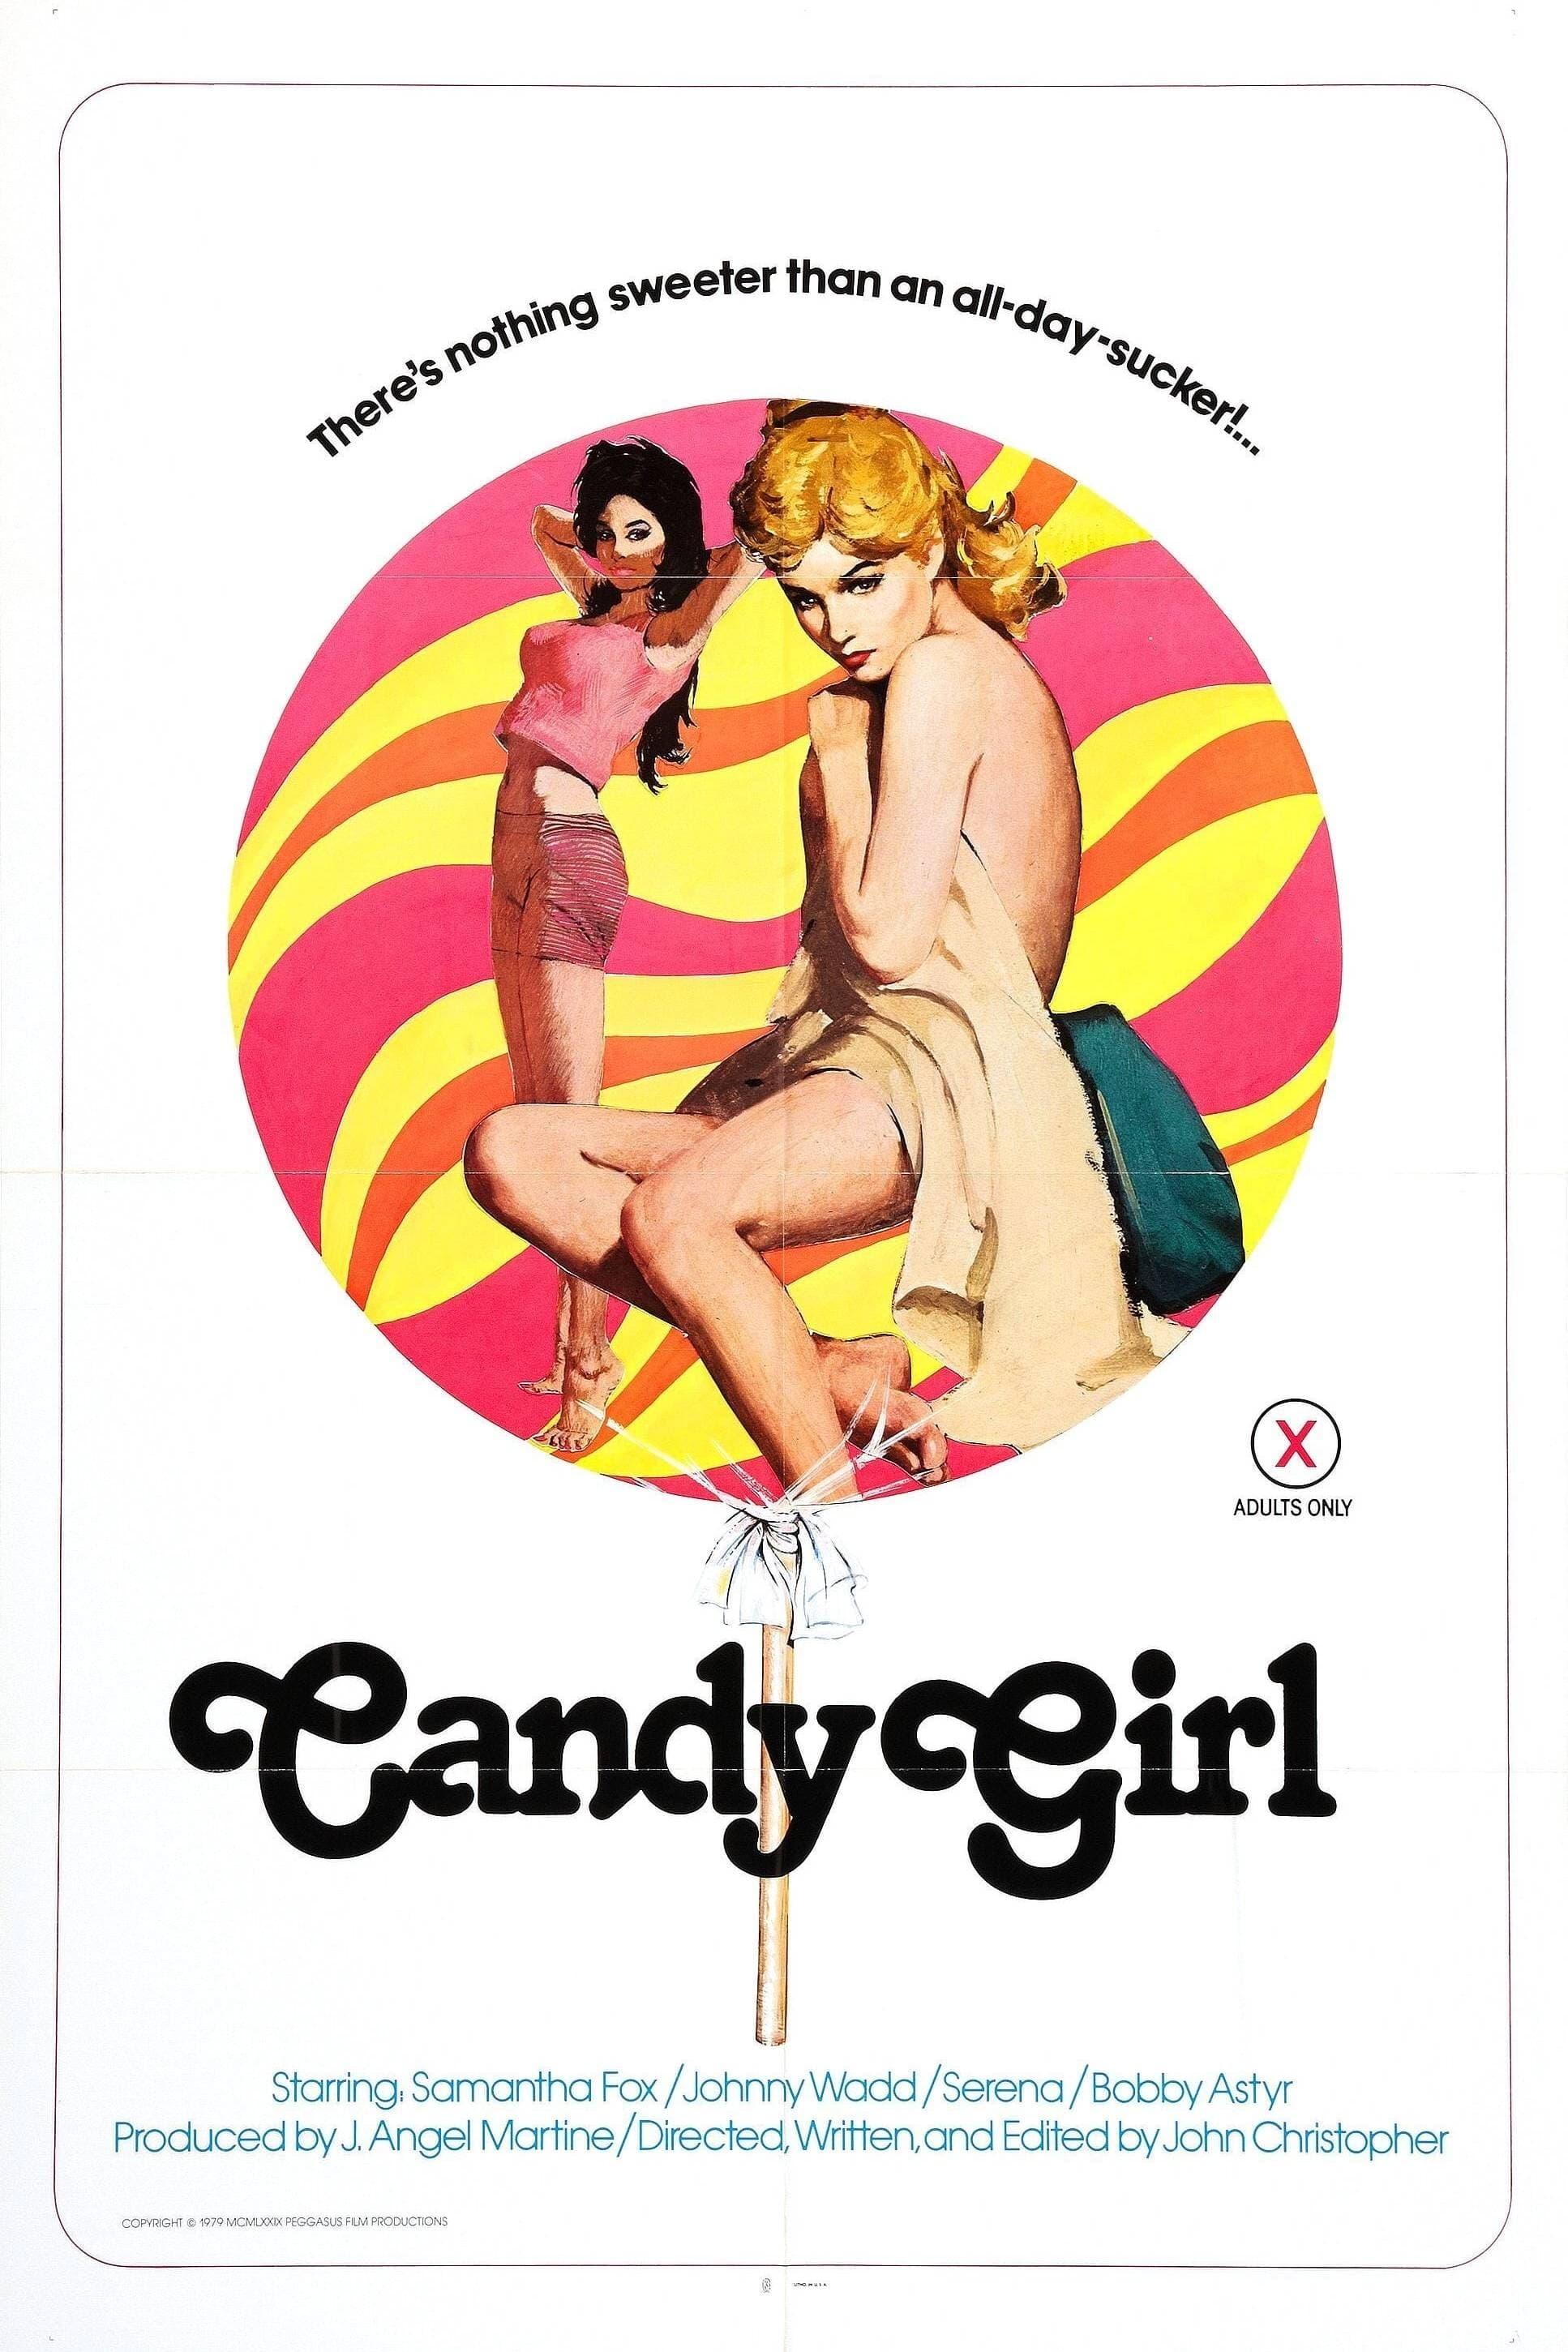 Candi Girl poster